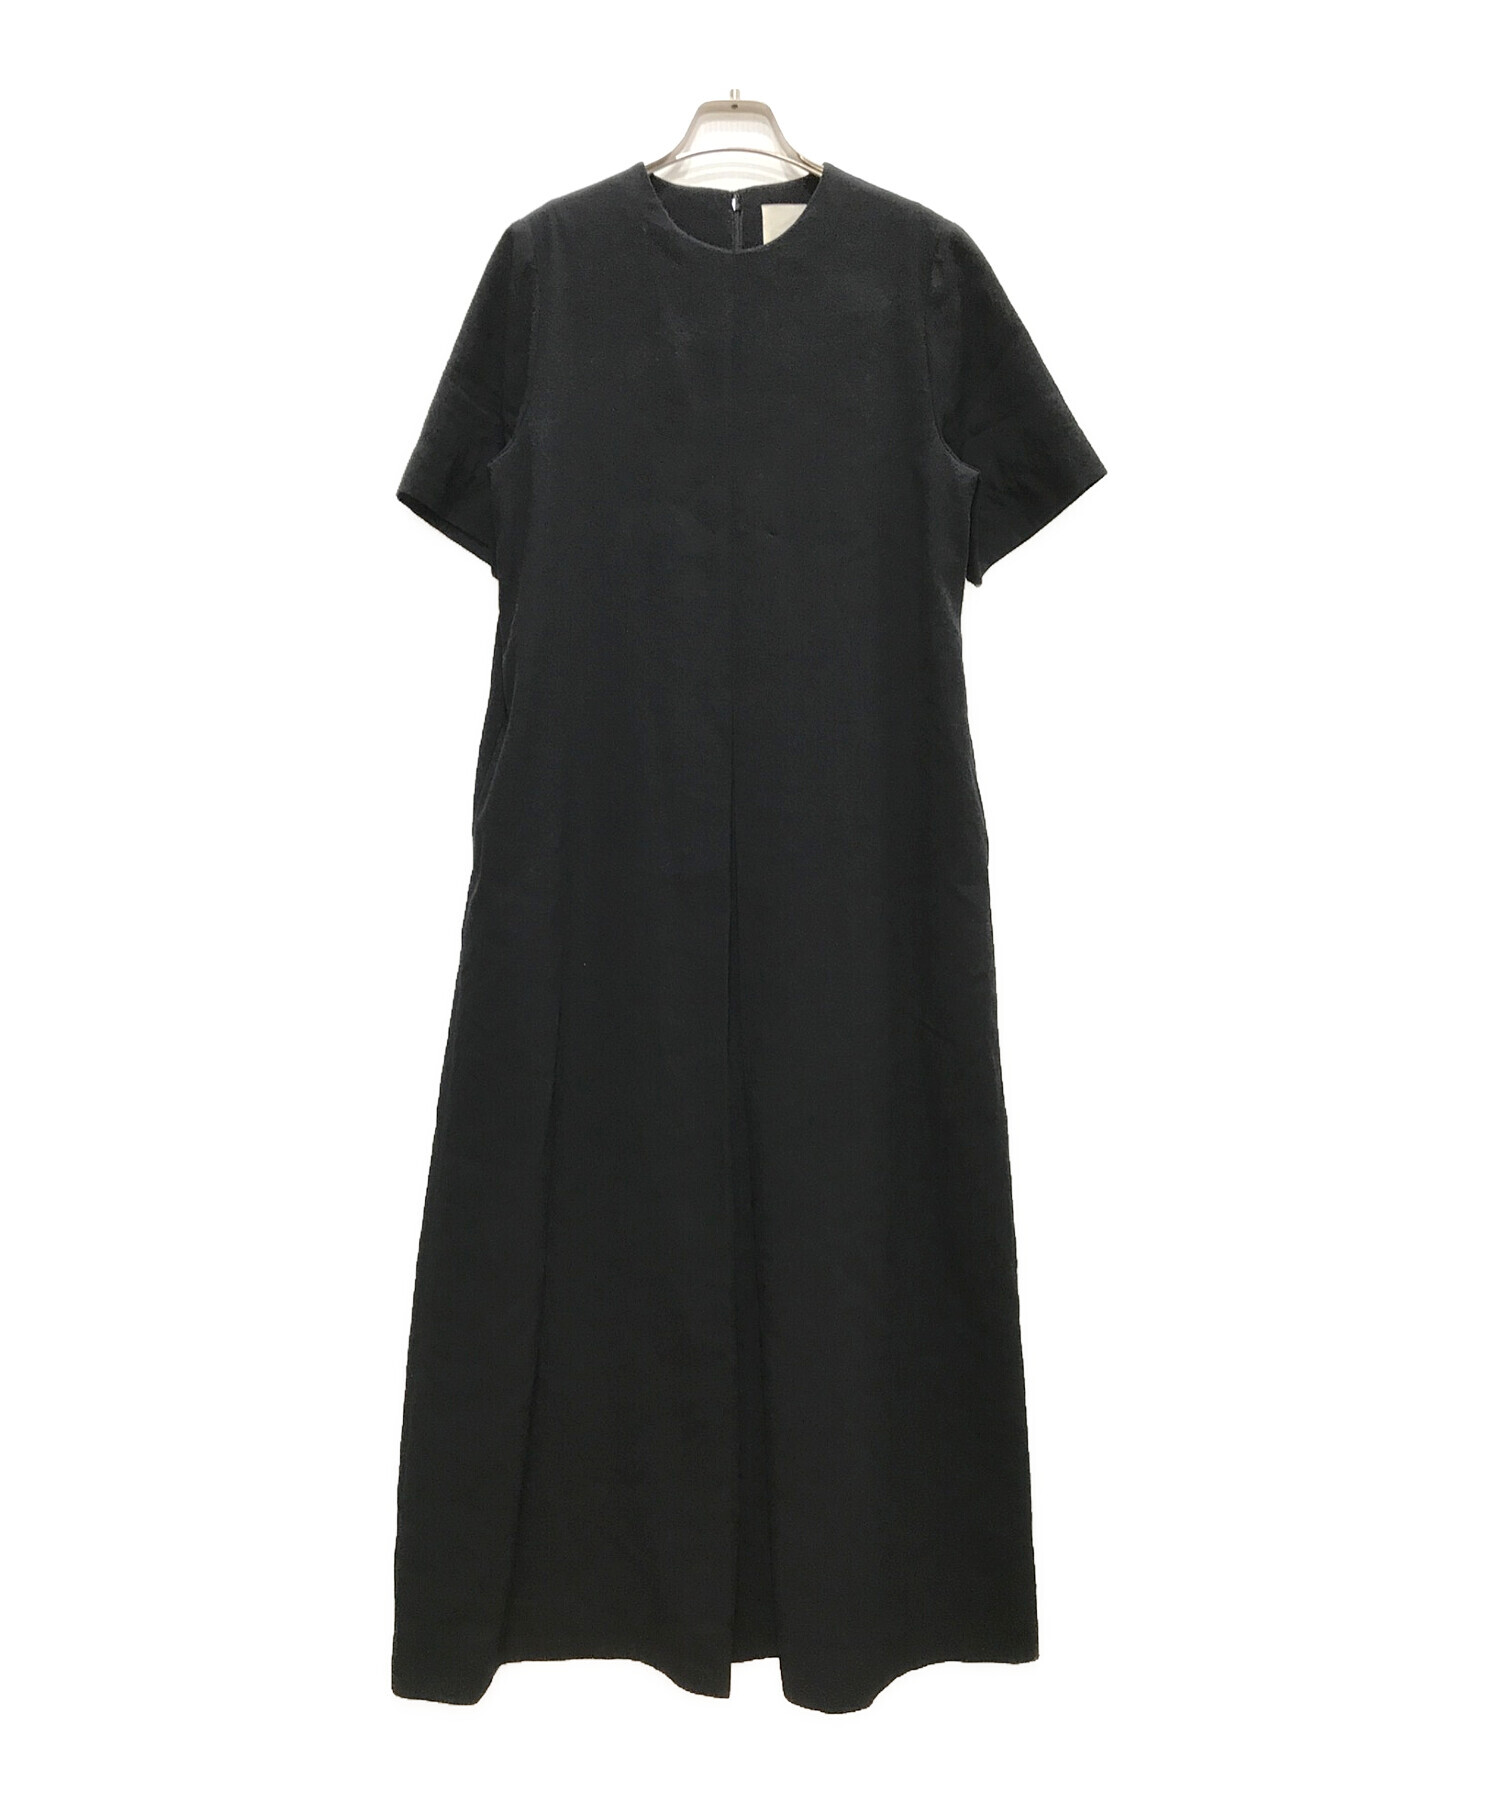 【新品 タグ値札付】Halfsleeve Tuck Dress black素材